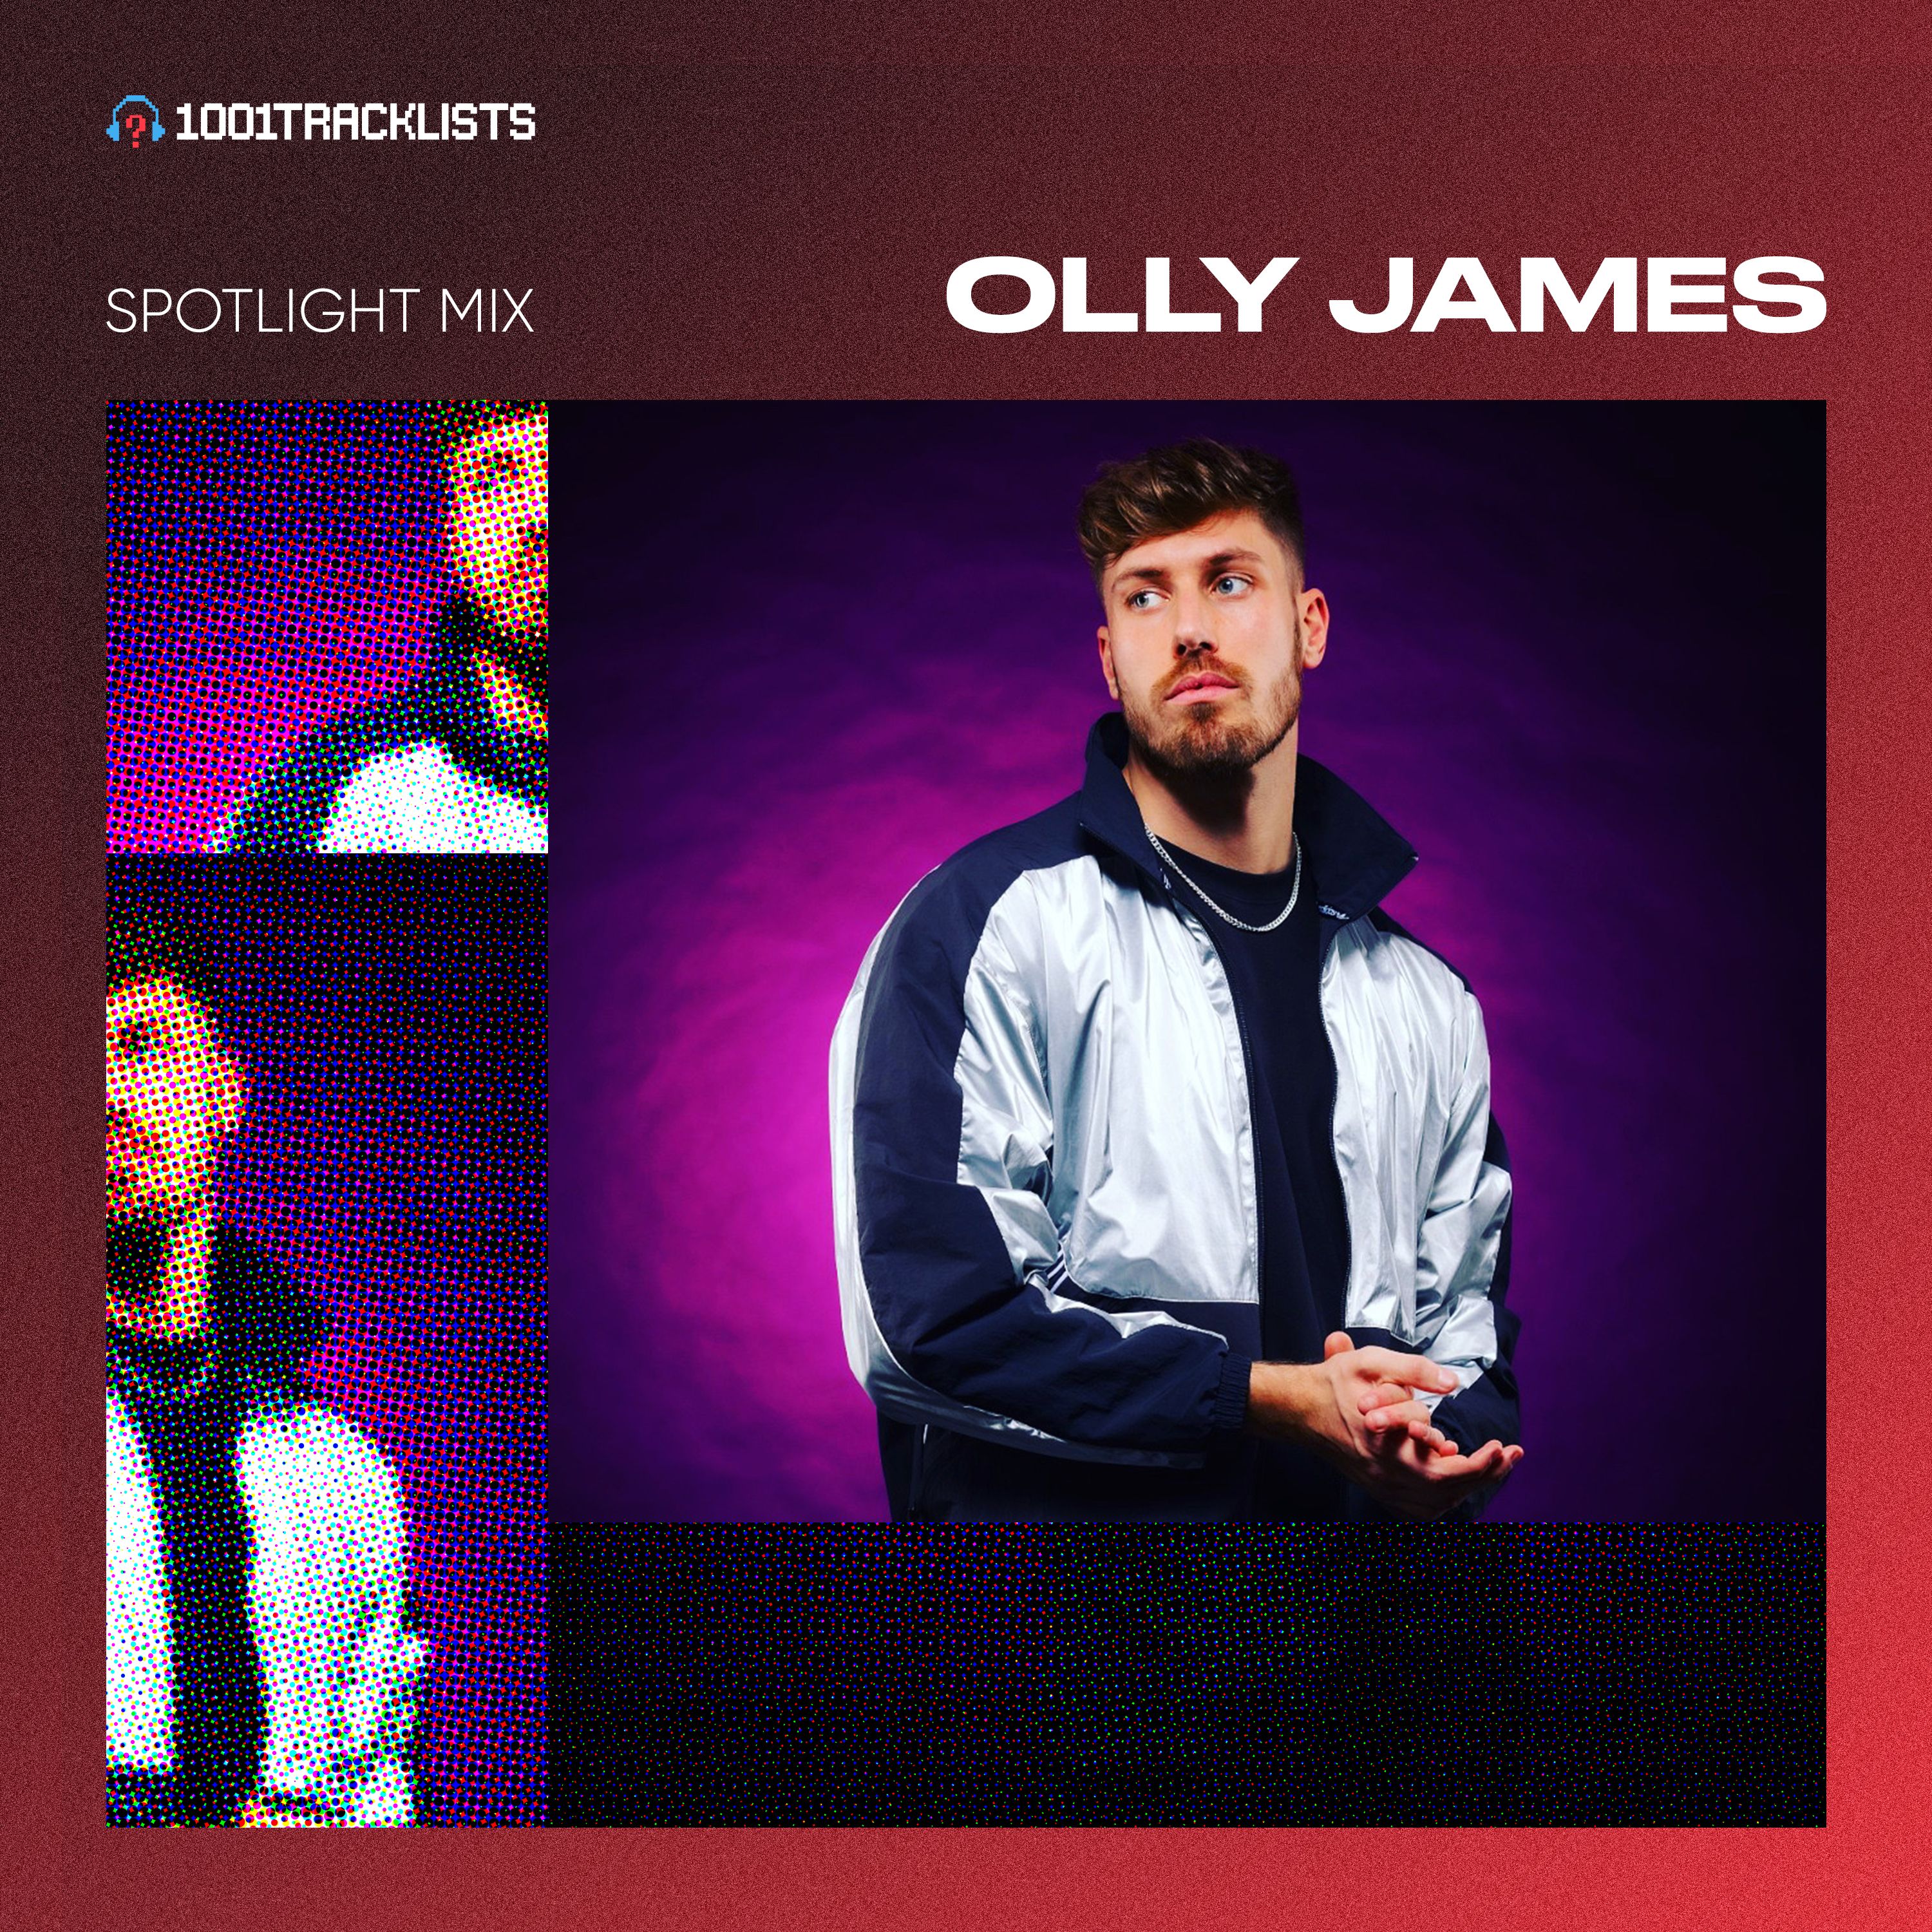 Olly James - 1001Tracklists ‘Rave Room Recordings’ Spotlight Mix